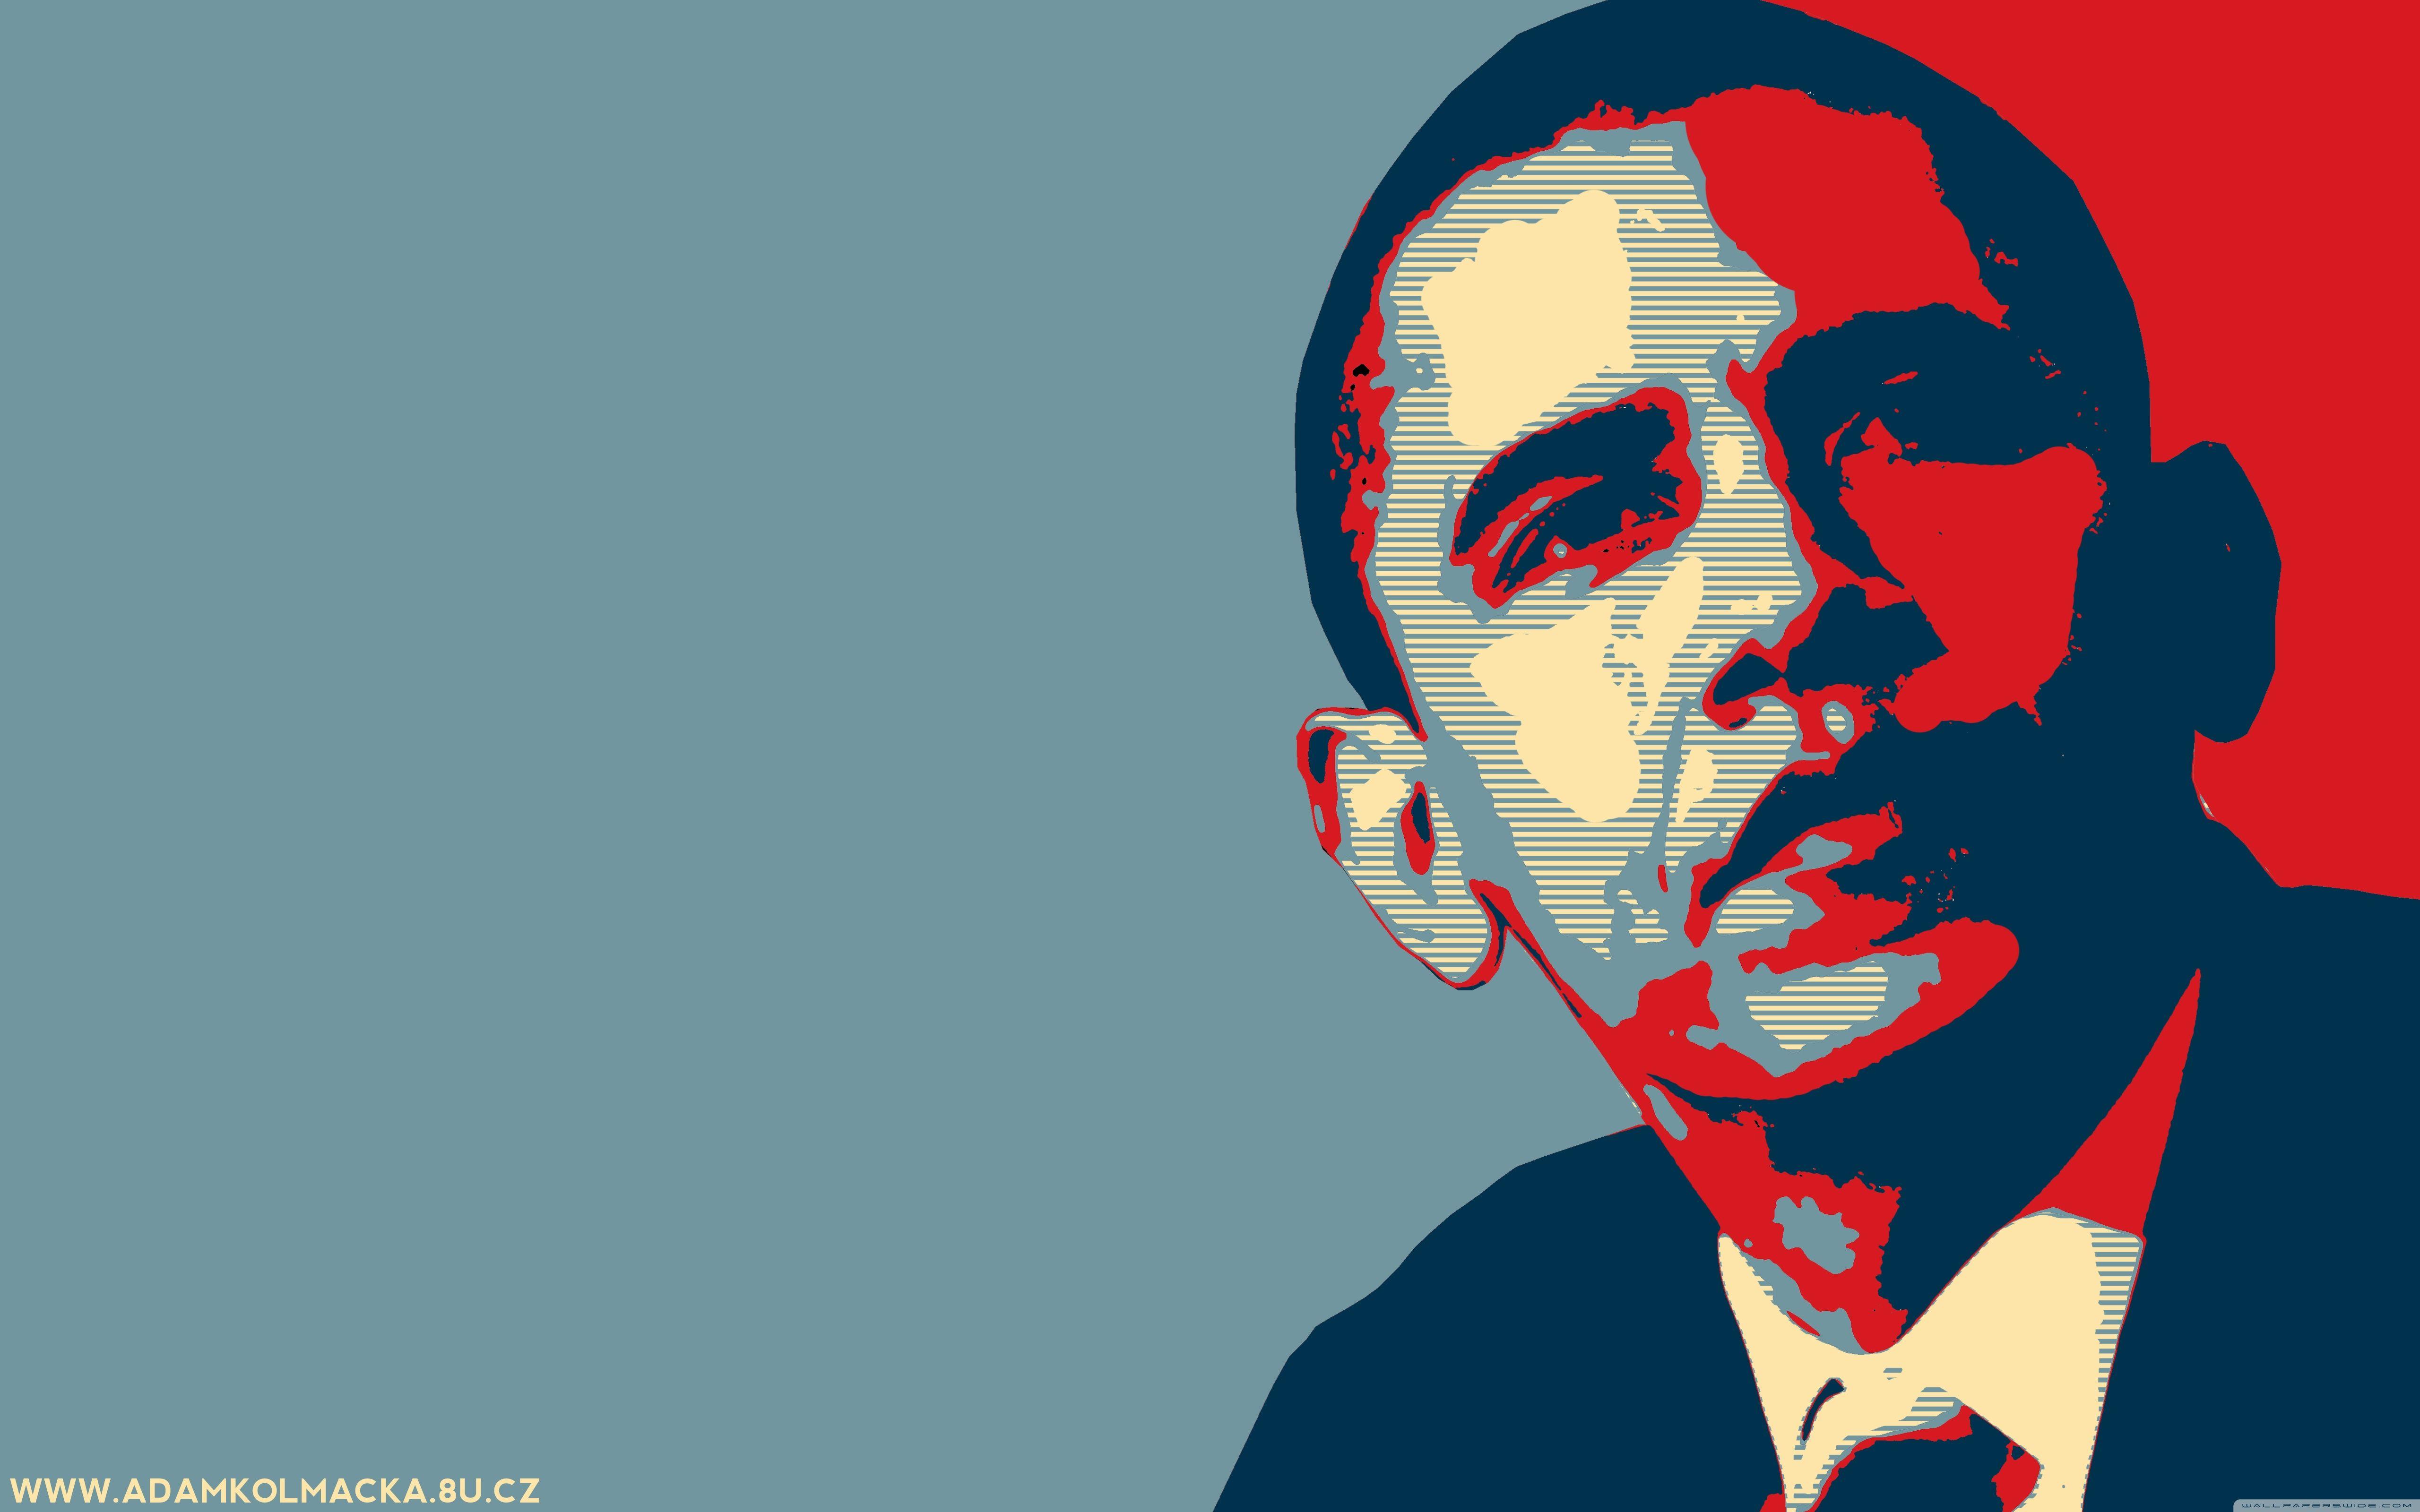 Barack Obama Wallpaper and Background Image